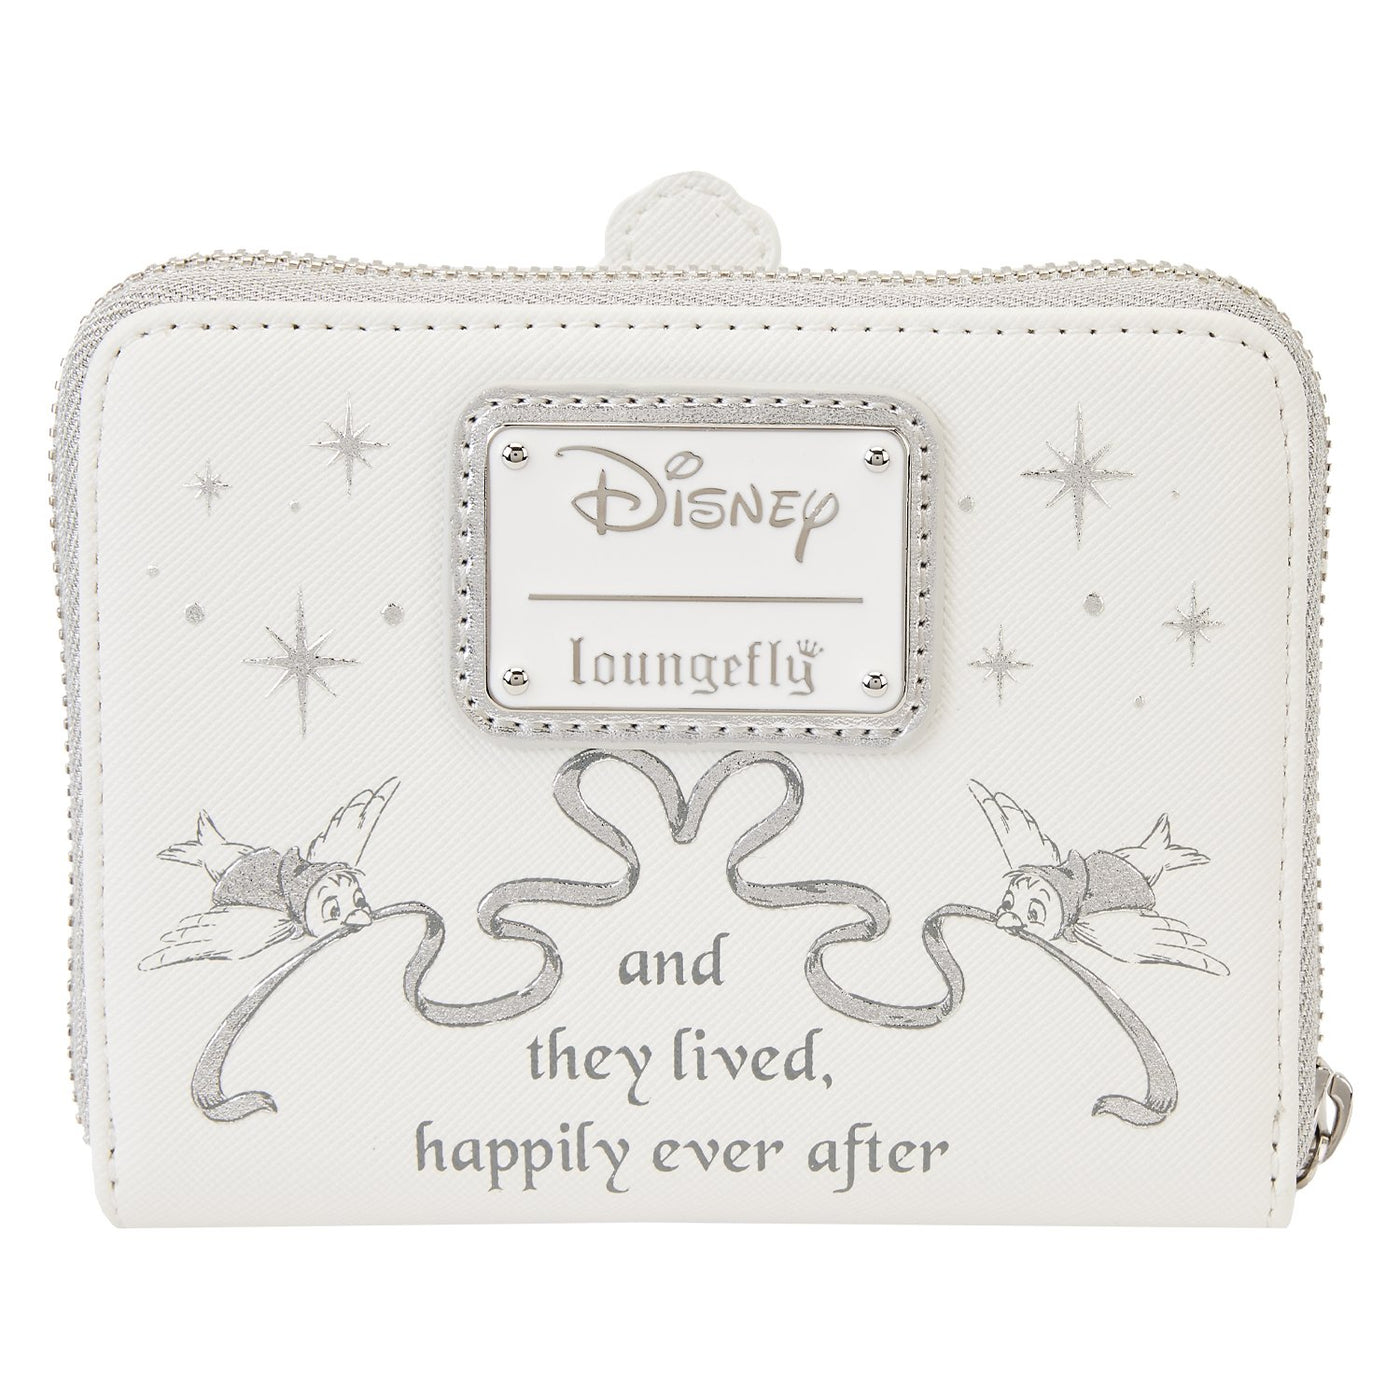 Loungefly Disney Cinderella Happily Ever After Zip-Around Wallet - Back - 671803391383